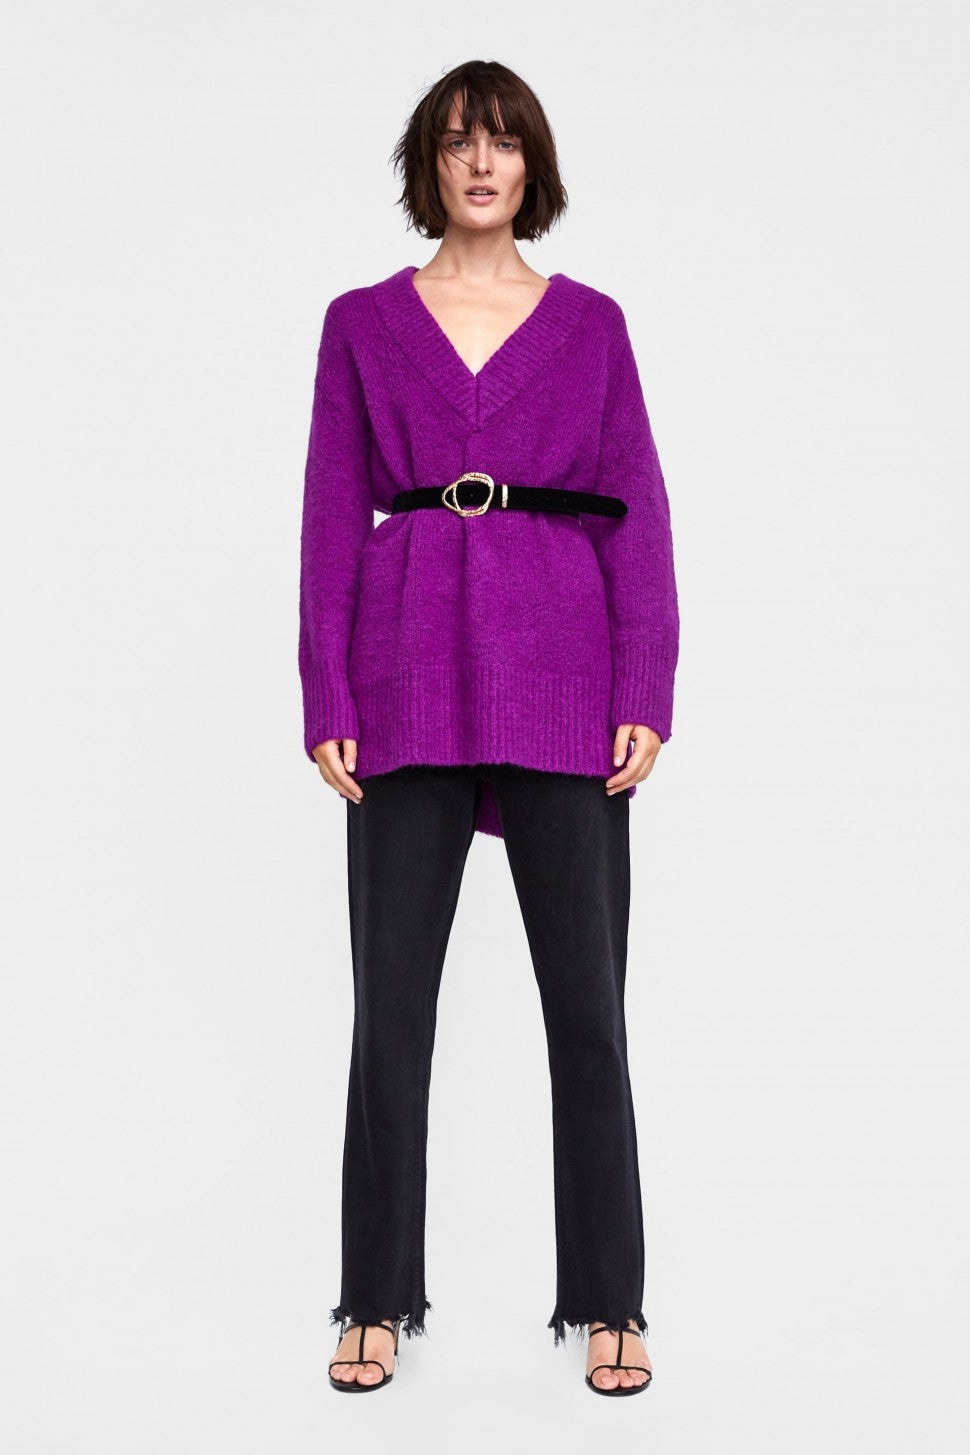 Zara purple sweater